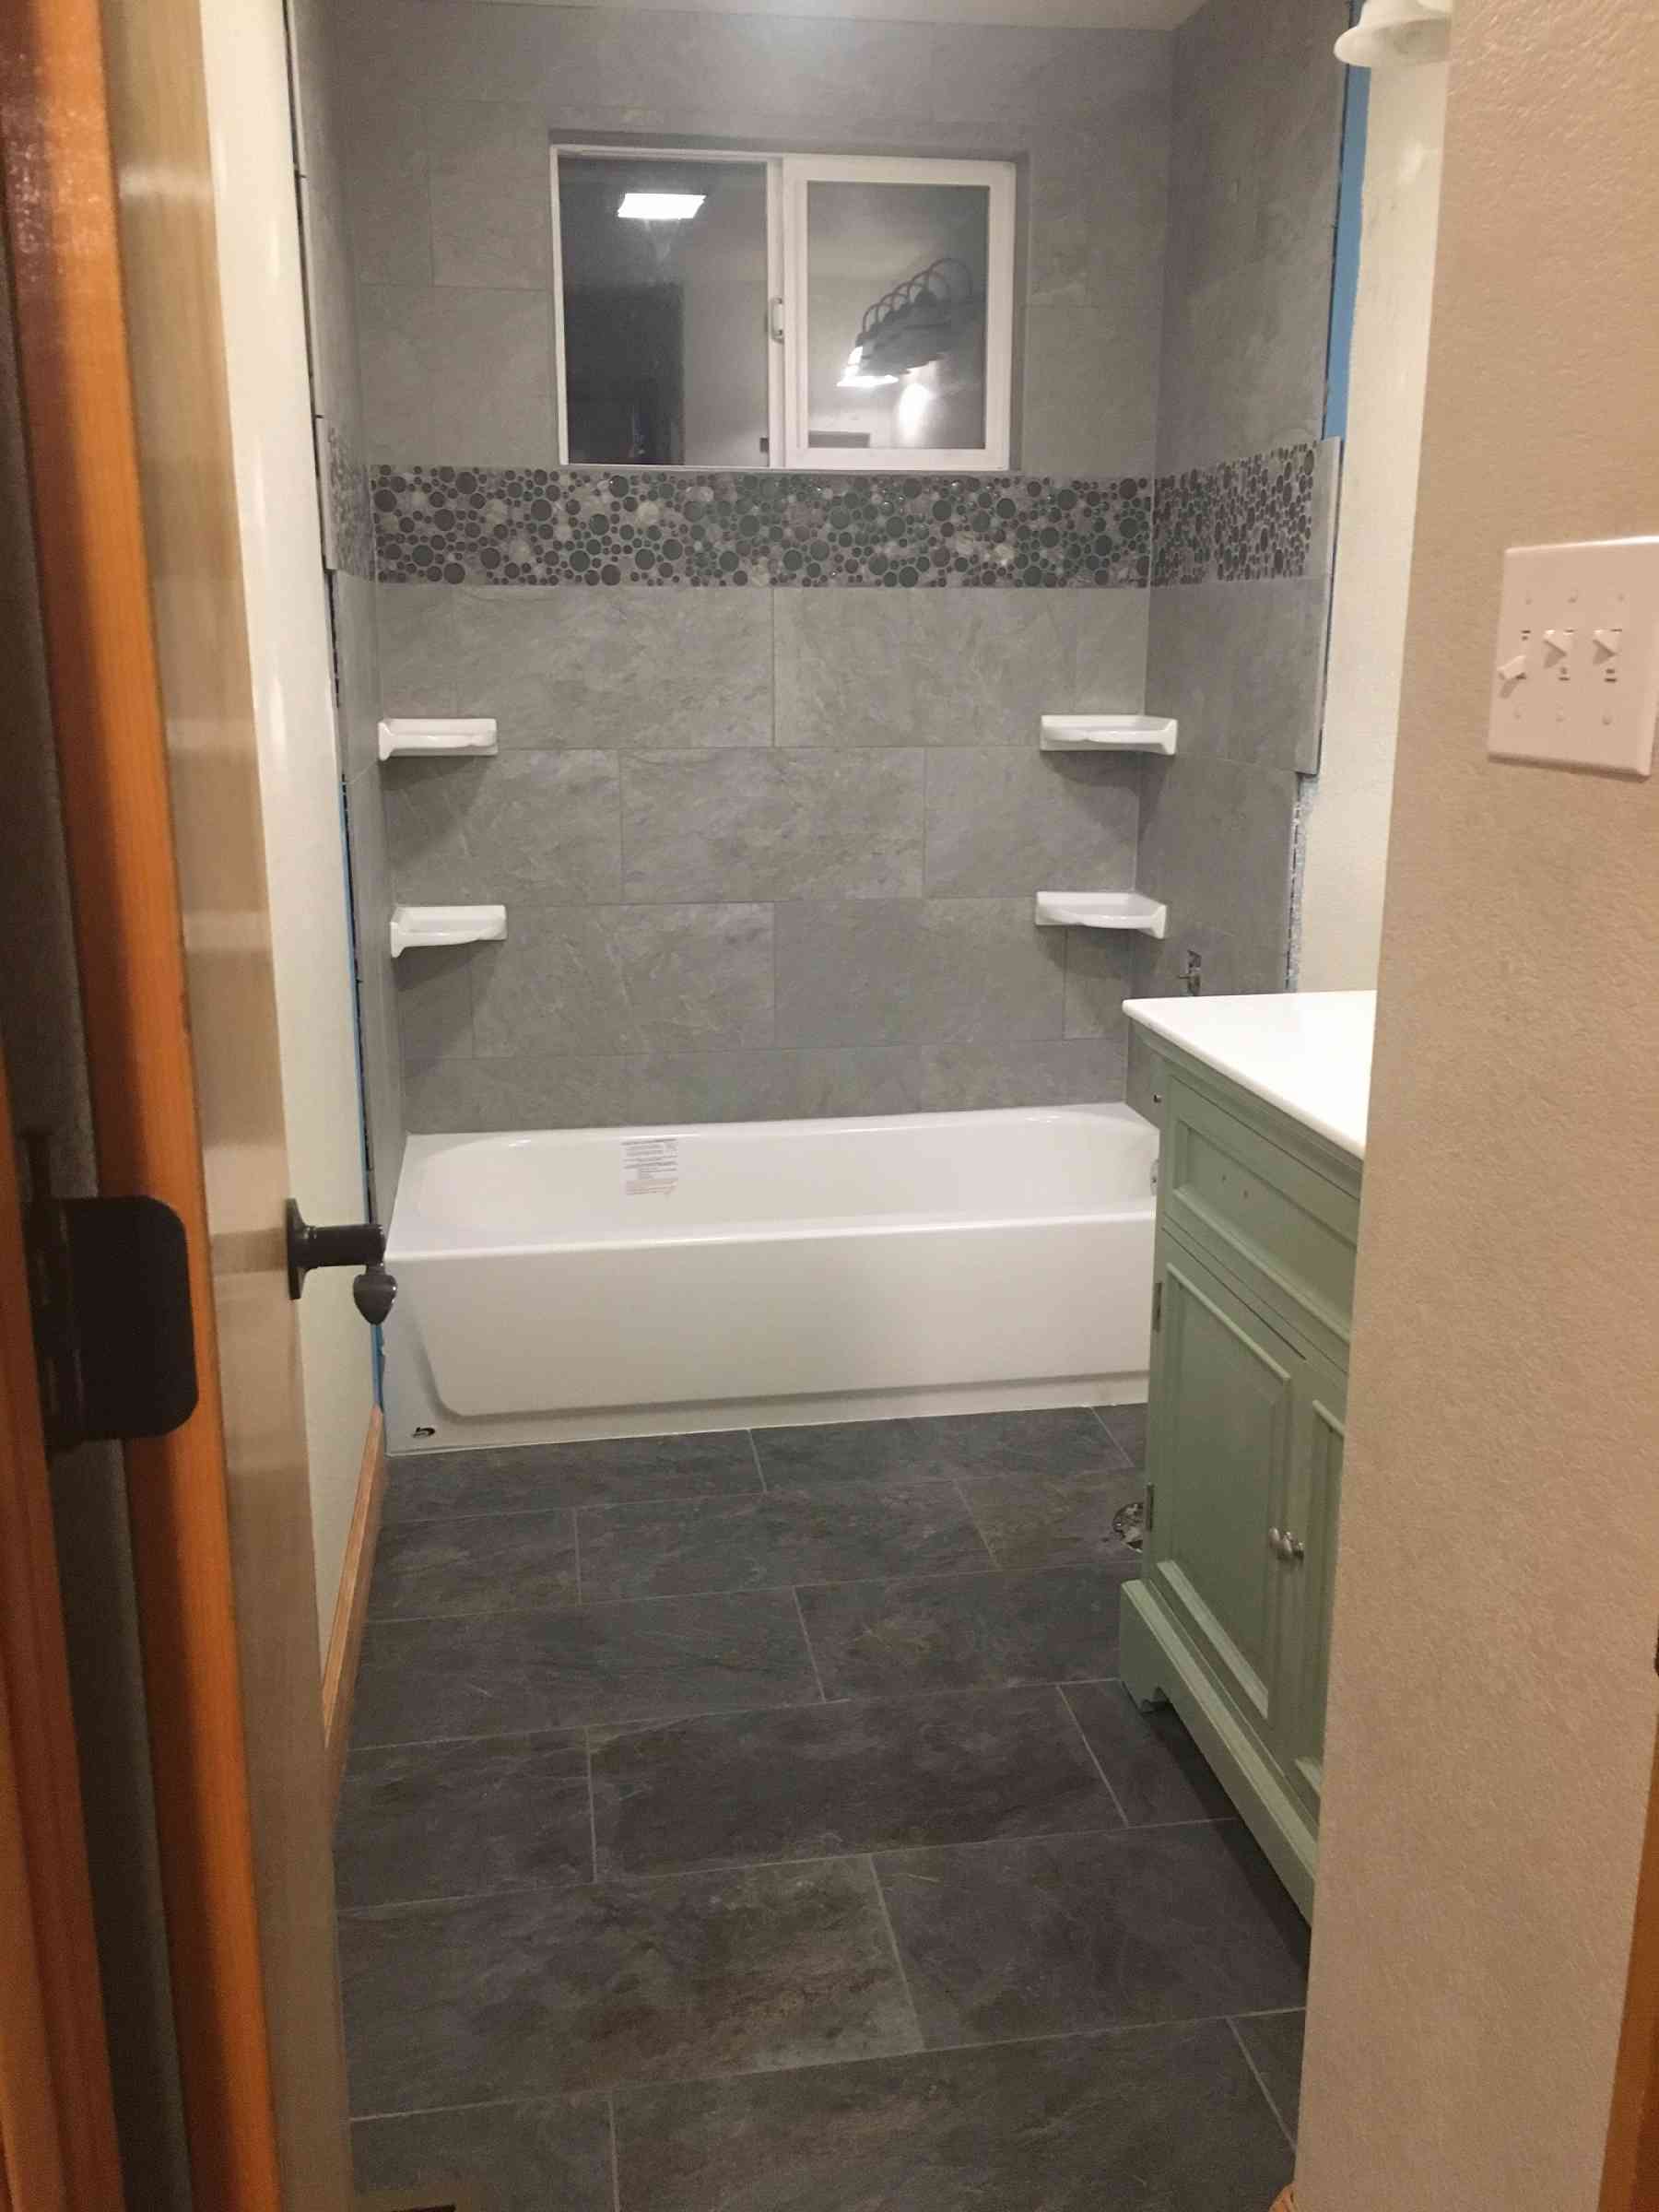 New shower and floor tile